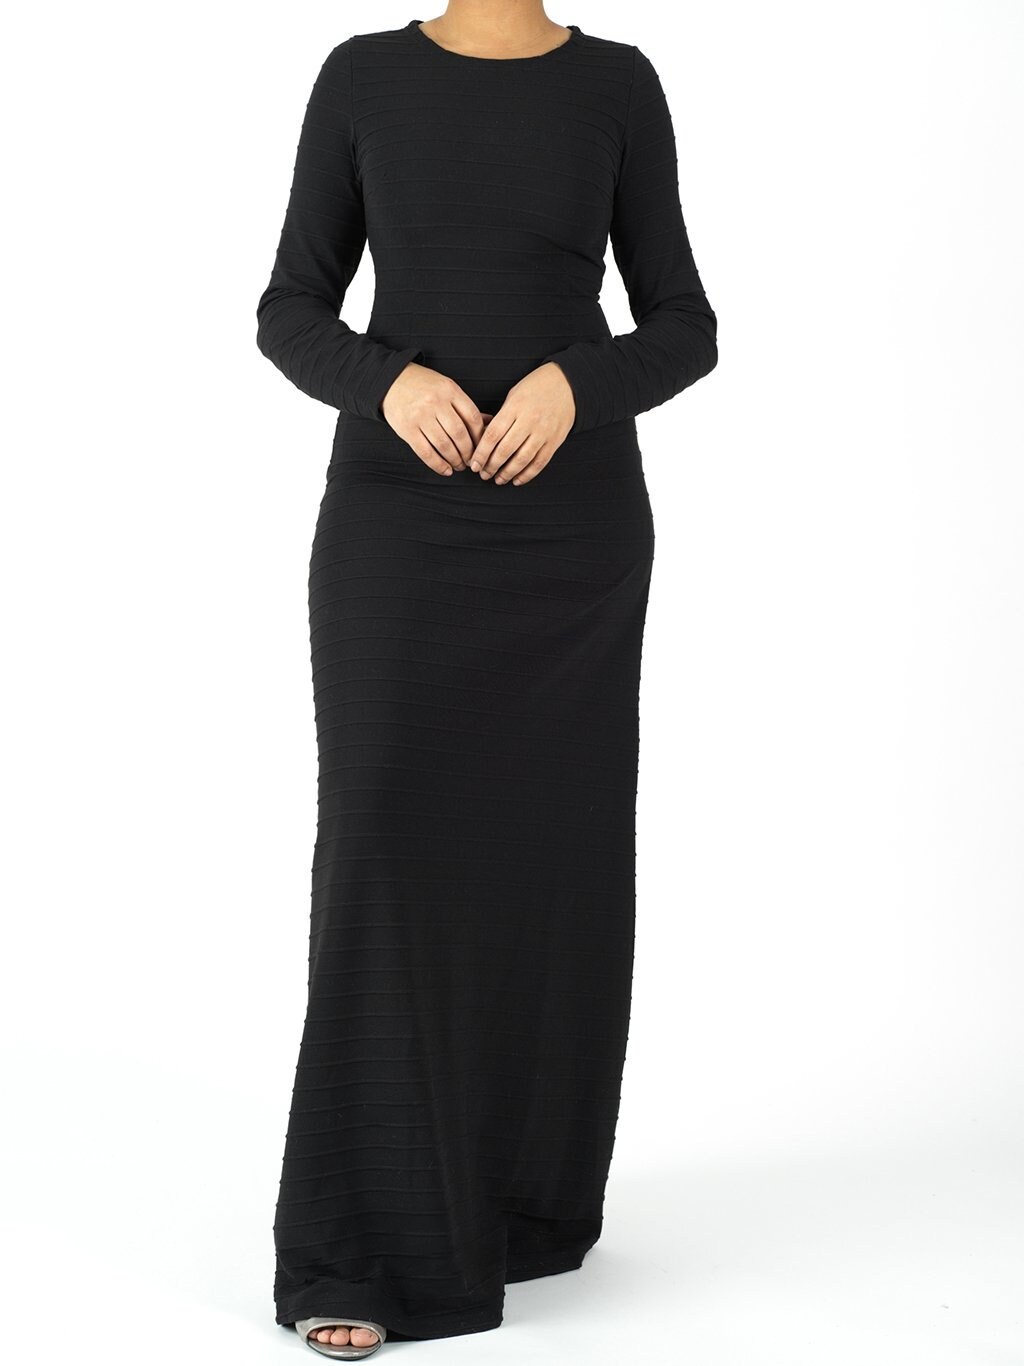 Black Bodycon Long Sleeve Maxi Dressmodest fashion modest | Etsy